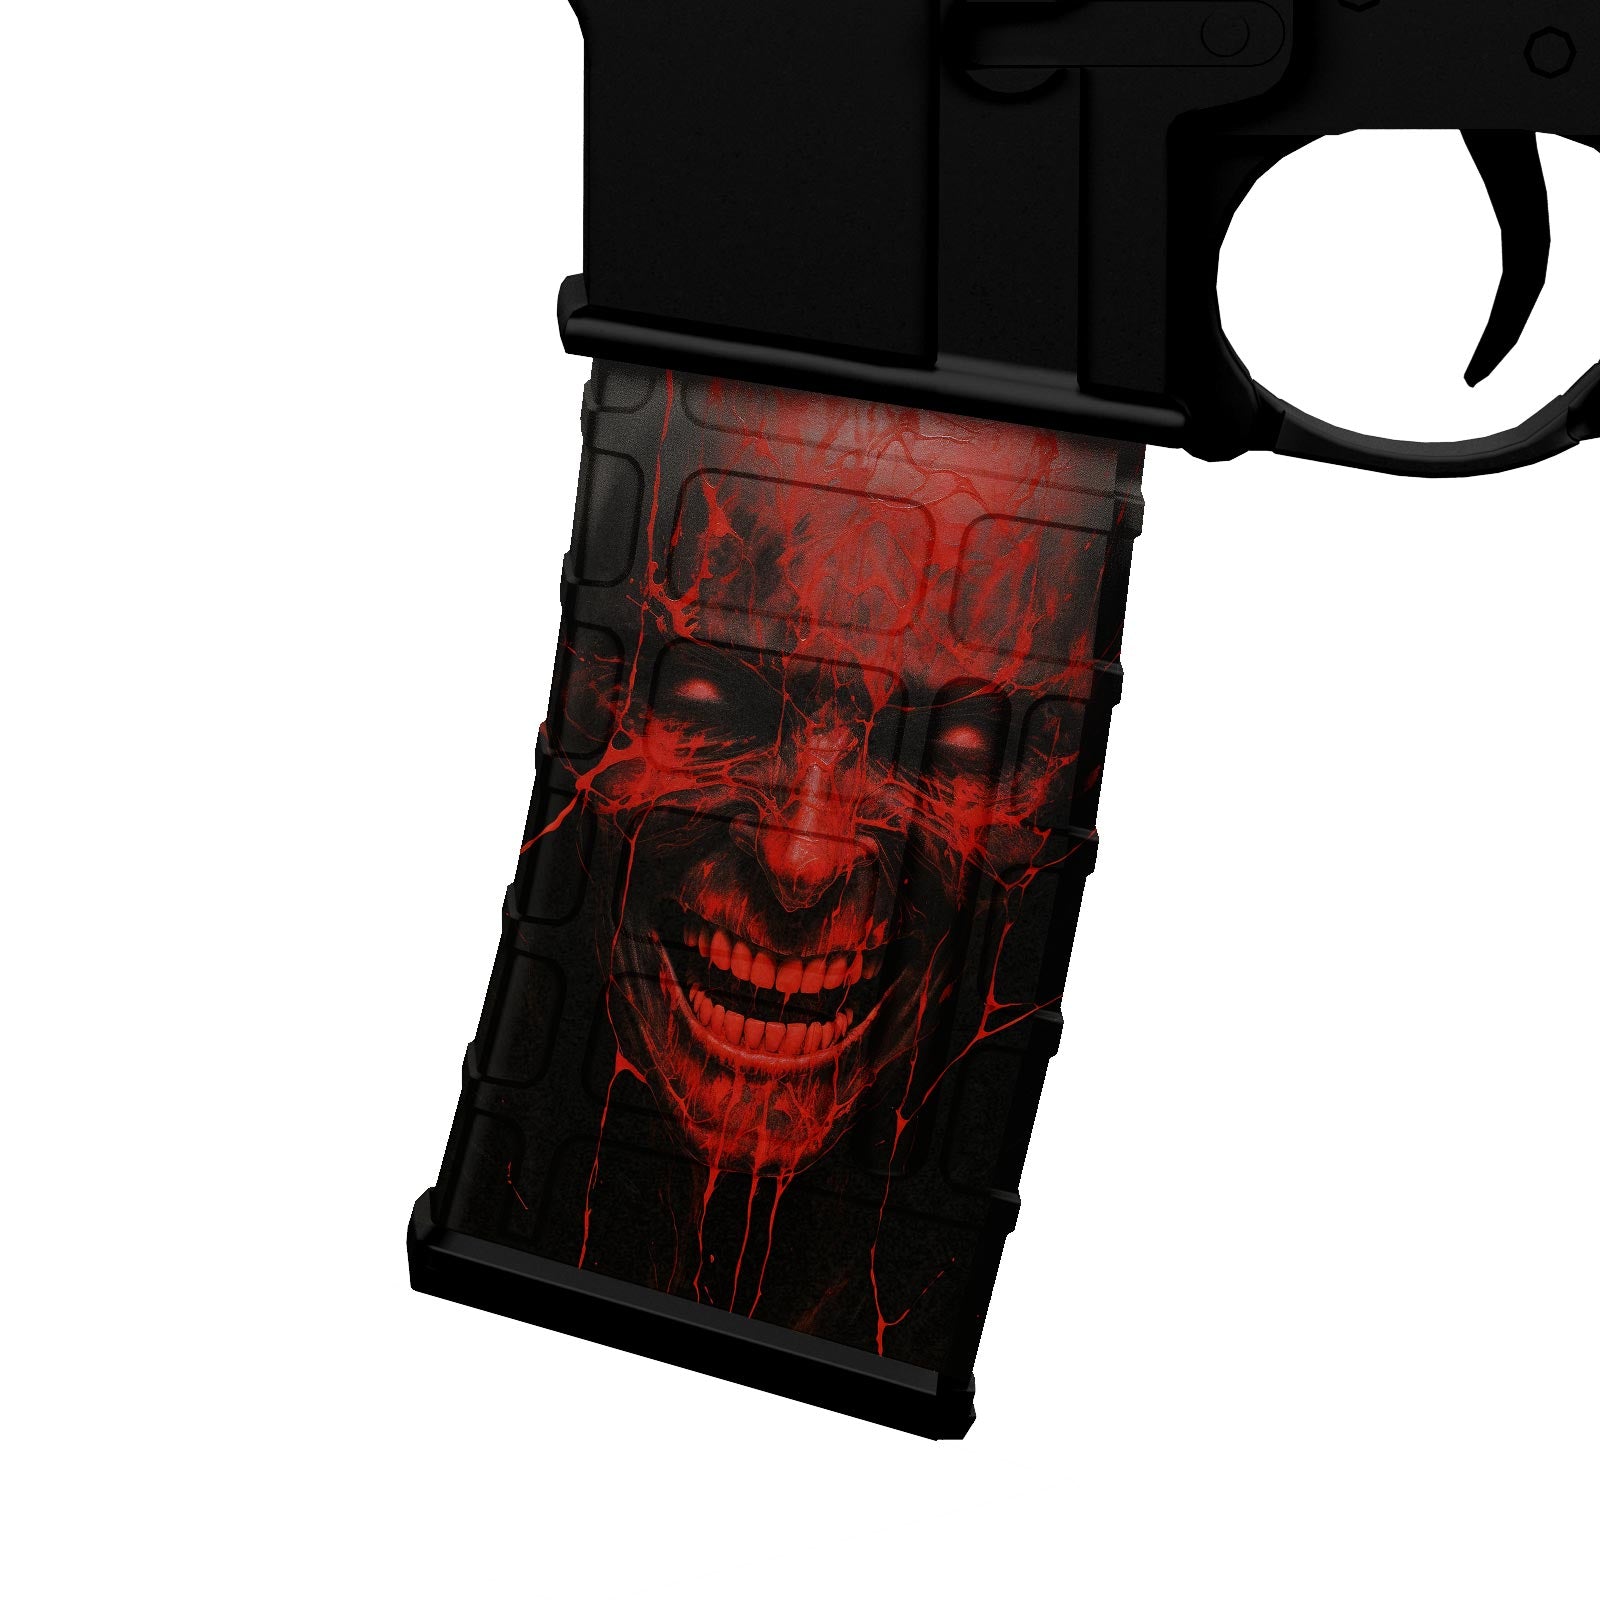 AR-15 Mag Skin - The Devil - WrapMyGun Gun Skins & AR-15 M4 Mag Skins